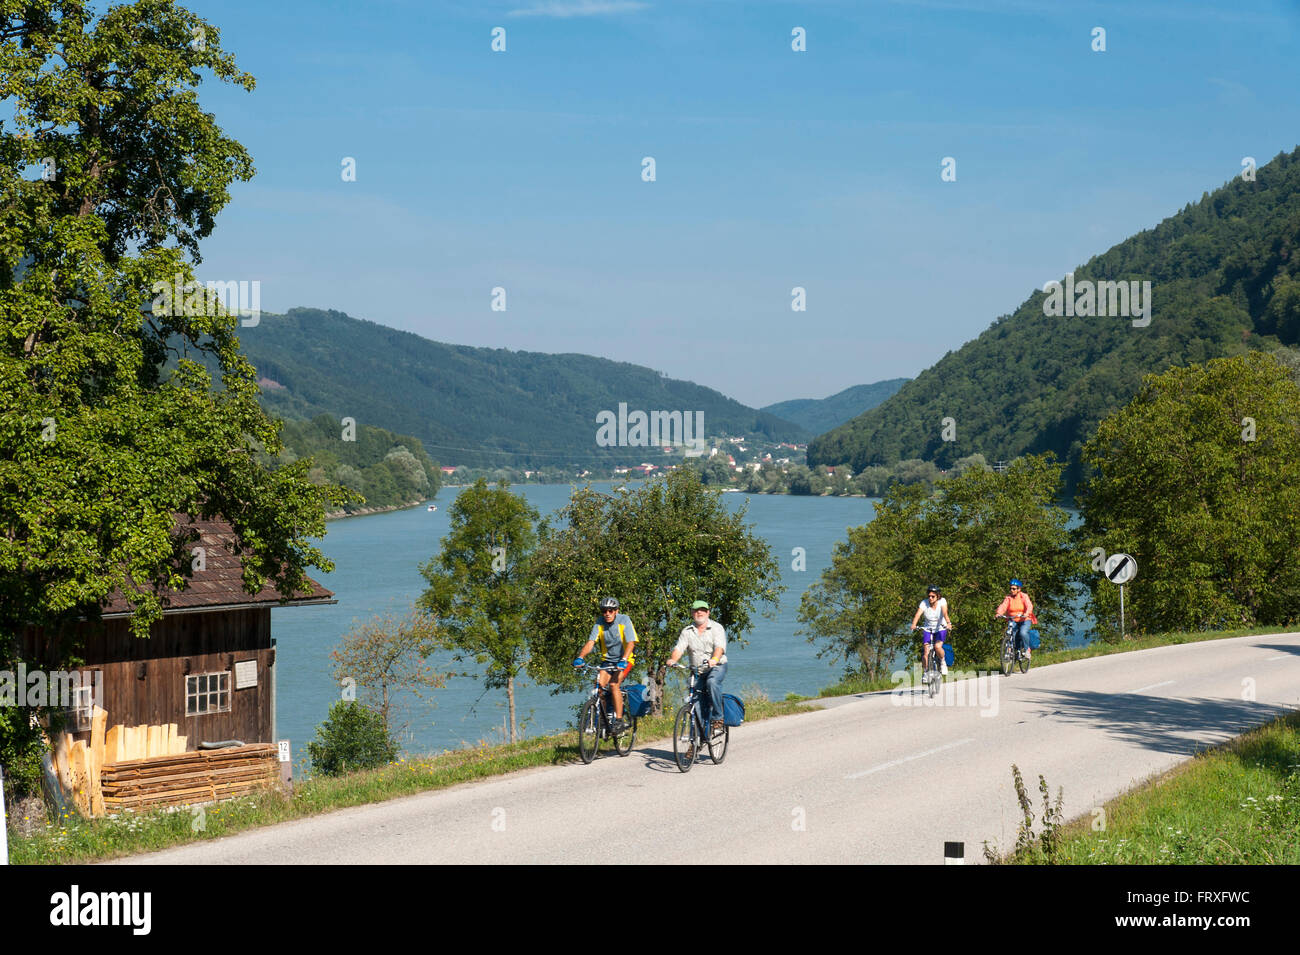 Cycle path near Engelhartszell, Danube, Austria Stock Photo